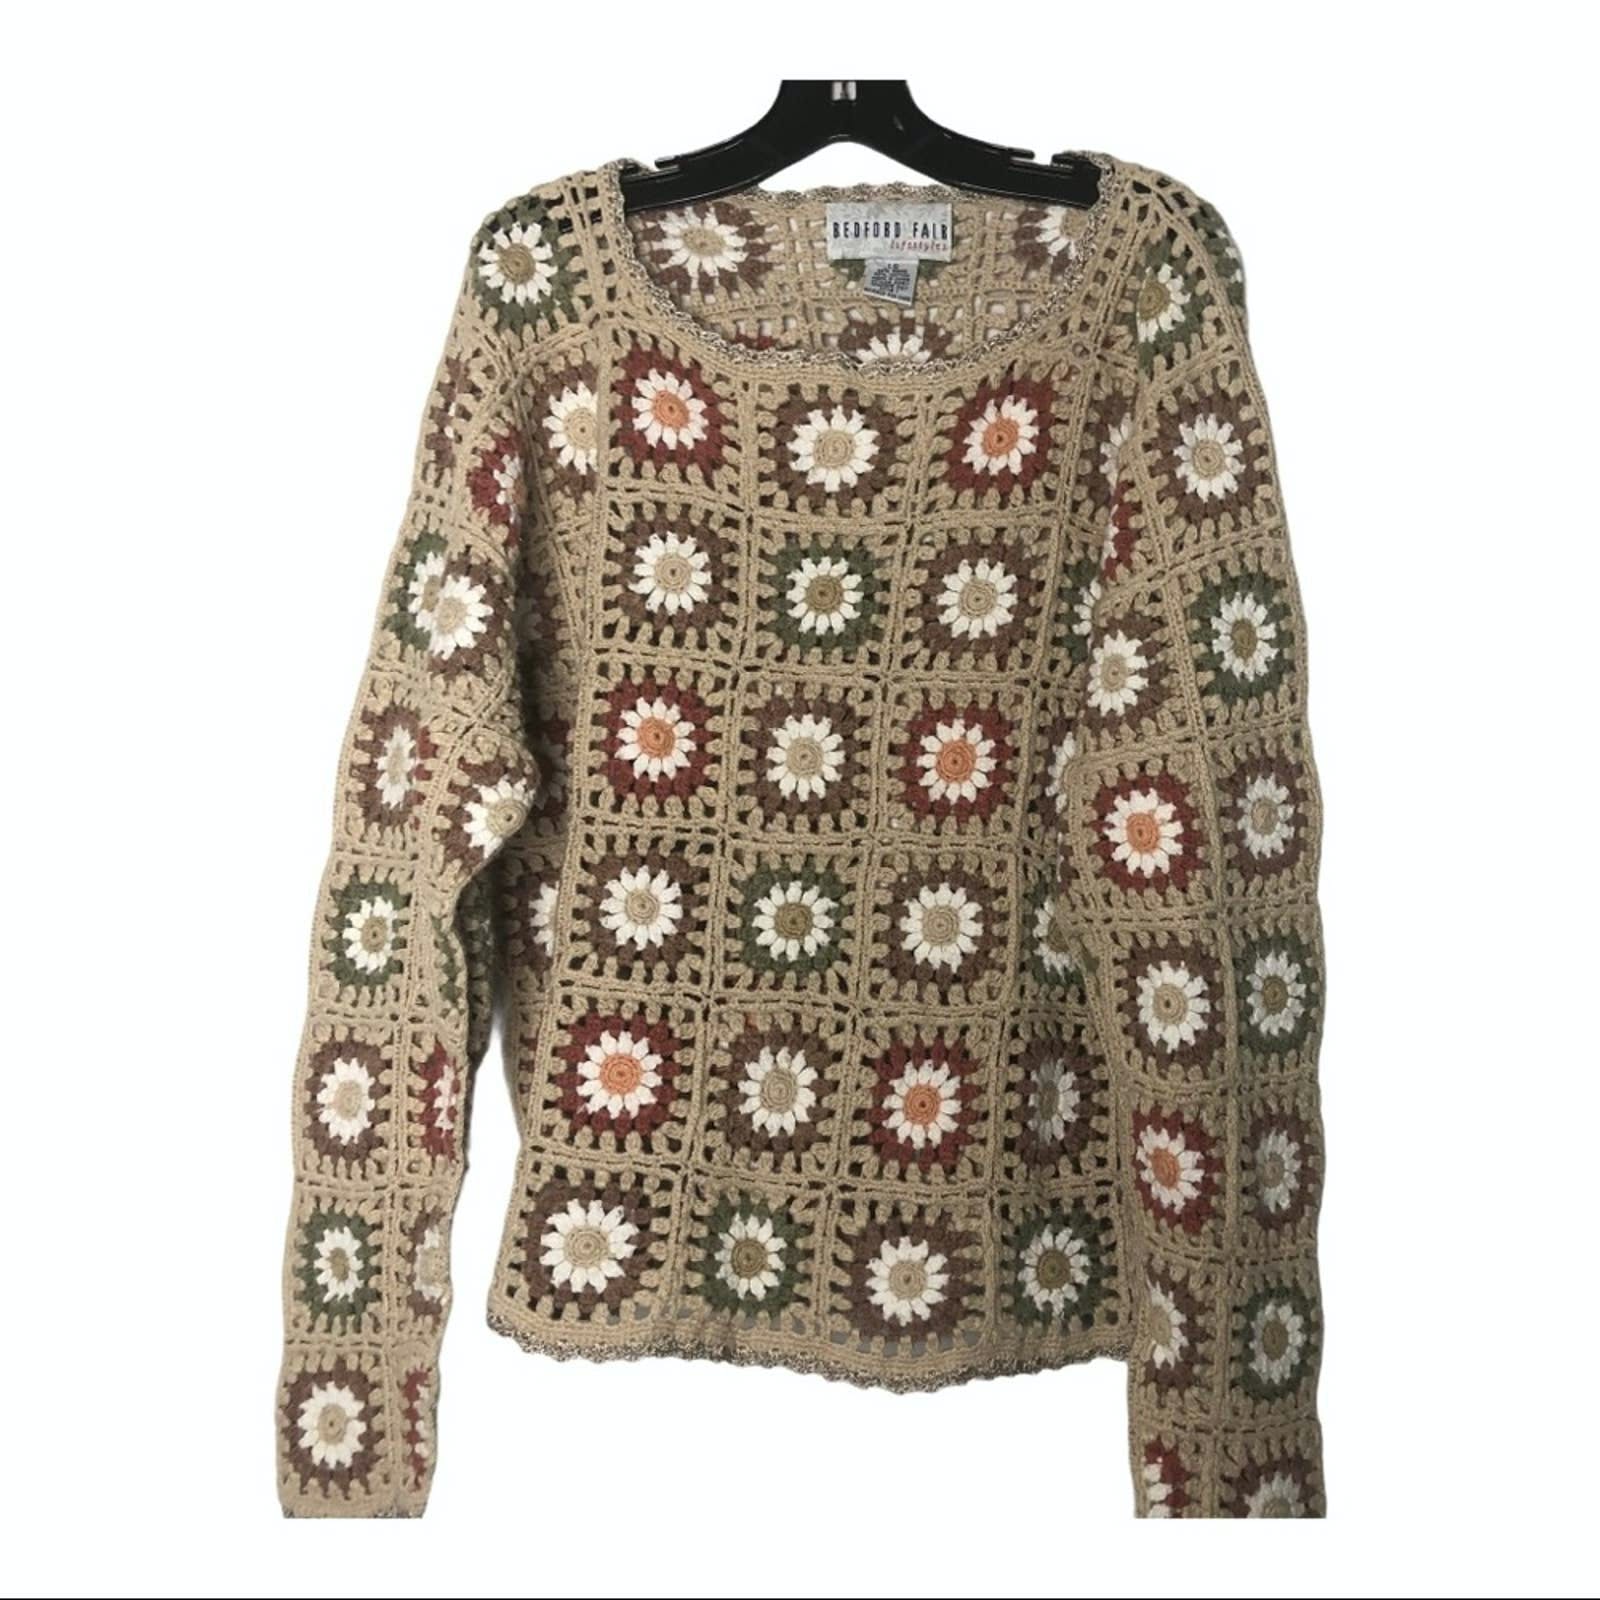 Vintage Granny Square Sweater | Shop THRILLING